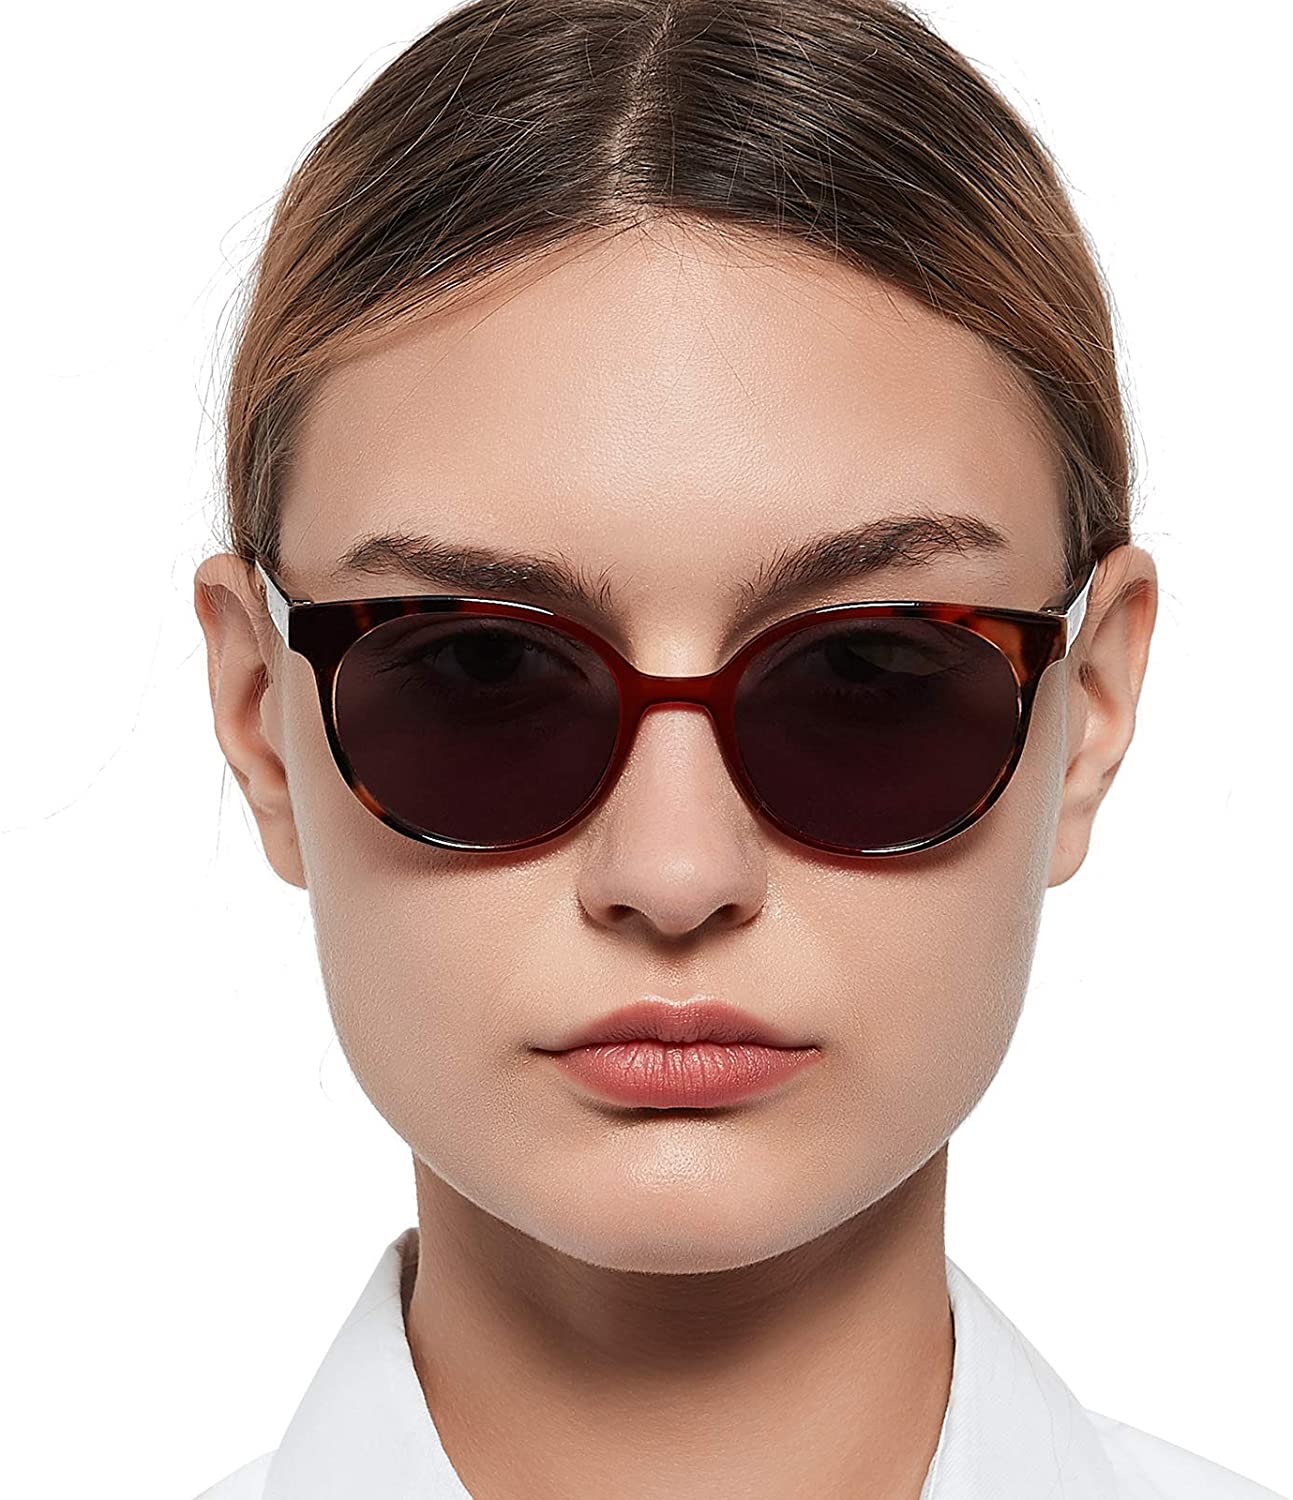 Reading Sunglasses Women UV Protection Outdoor Reader Glasses 0.5-4.0